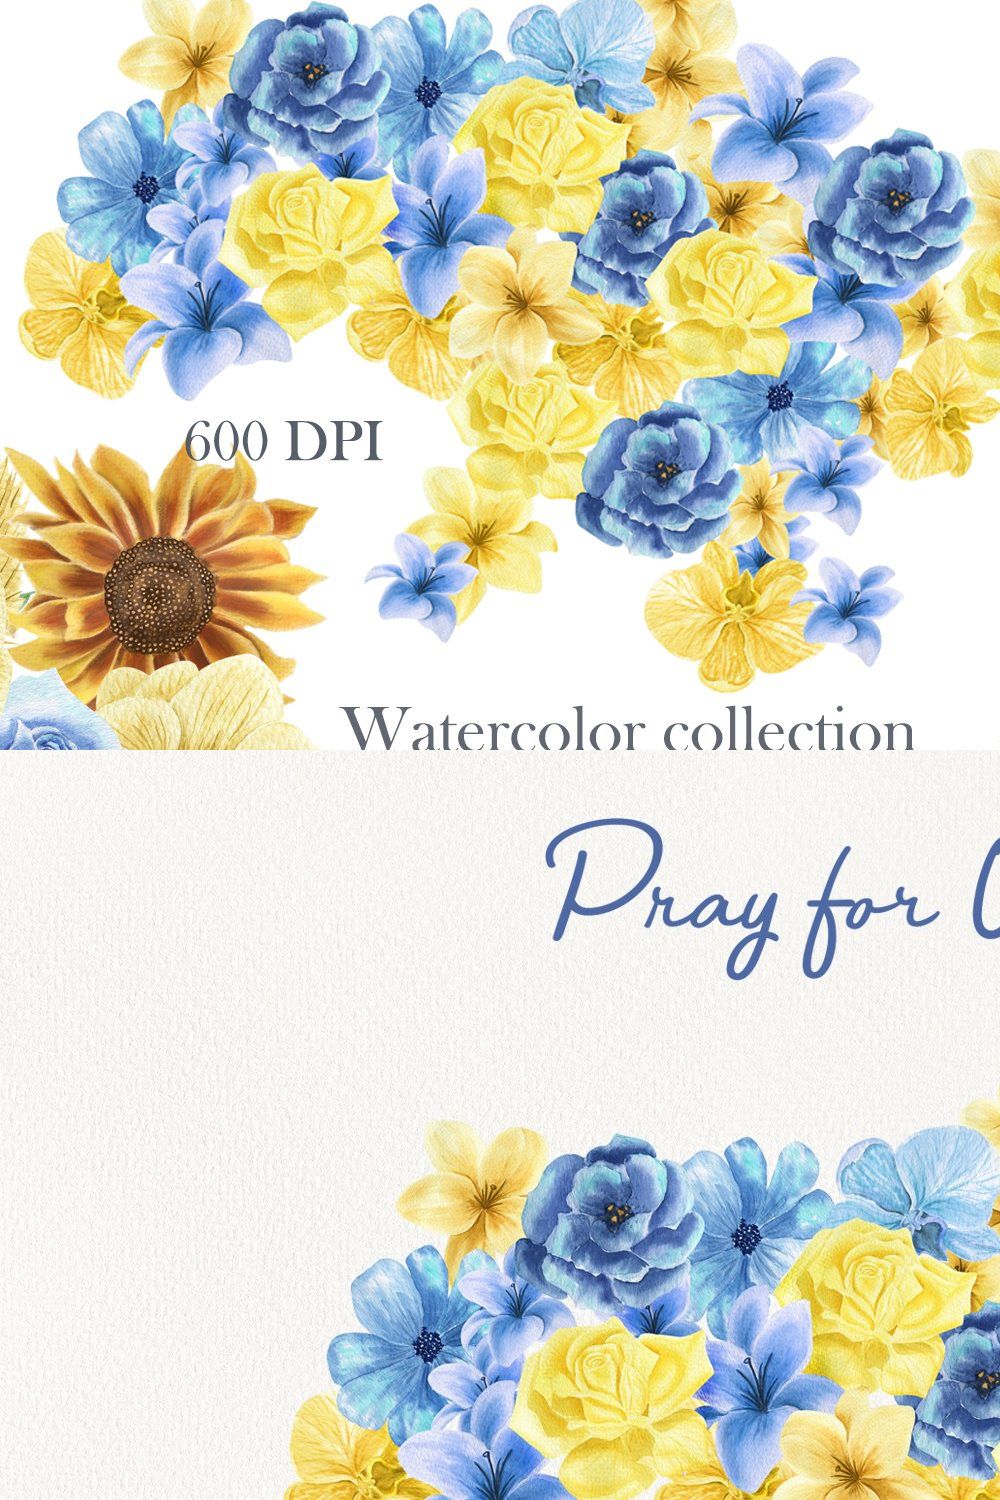 Ukraine watercolor flower collection pinterest preview image.